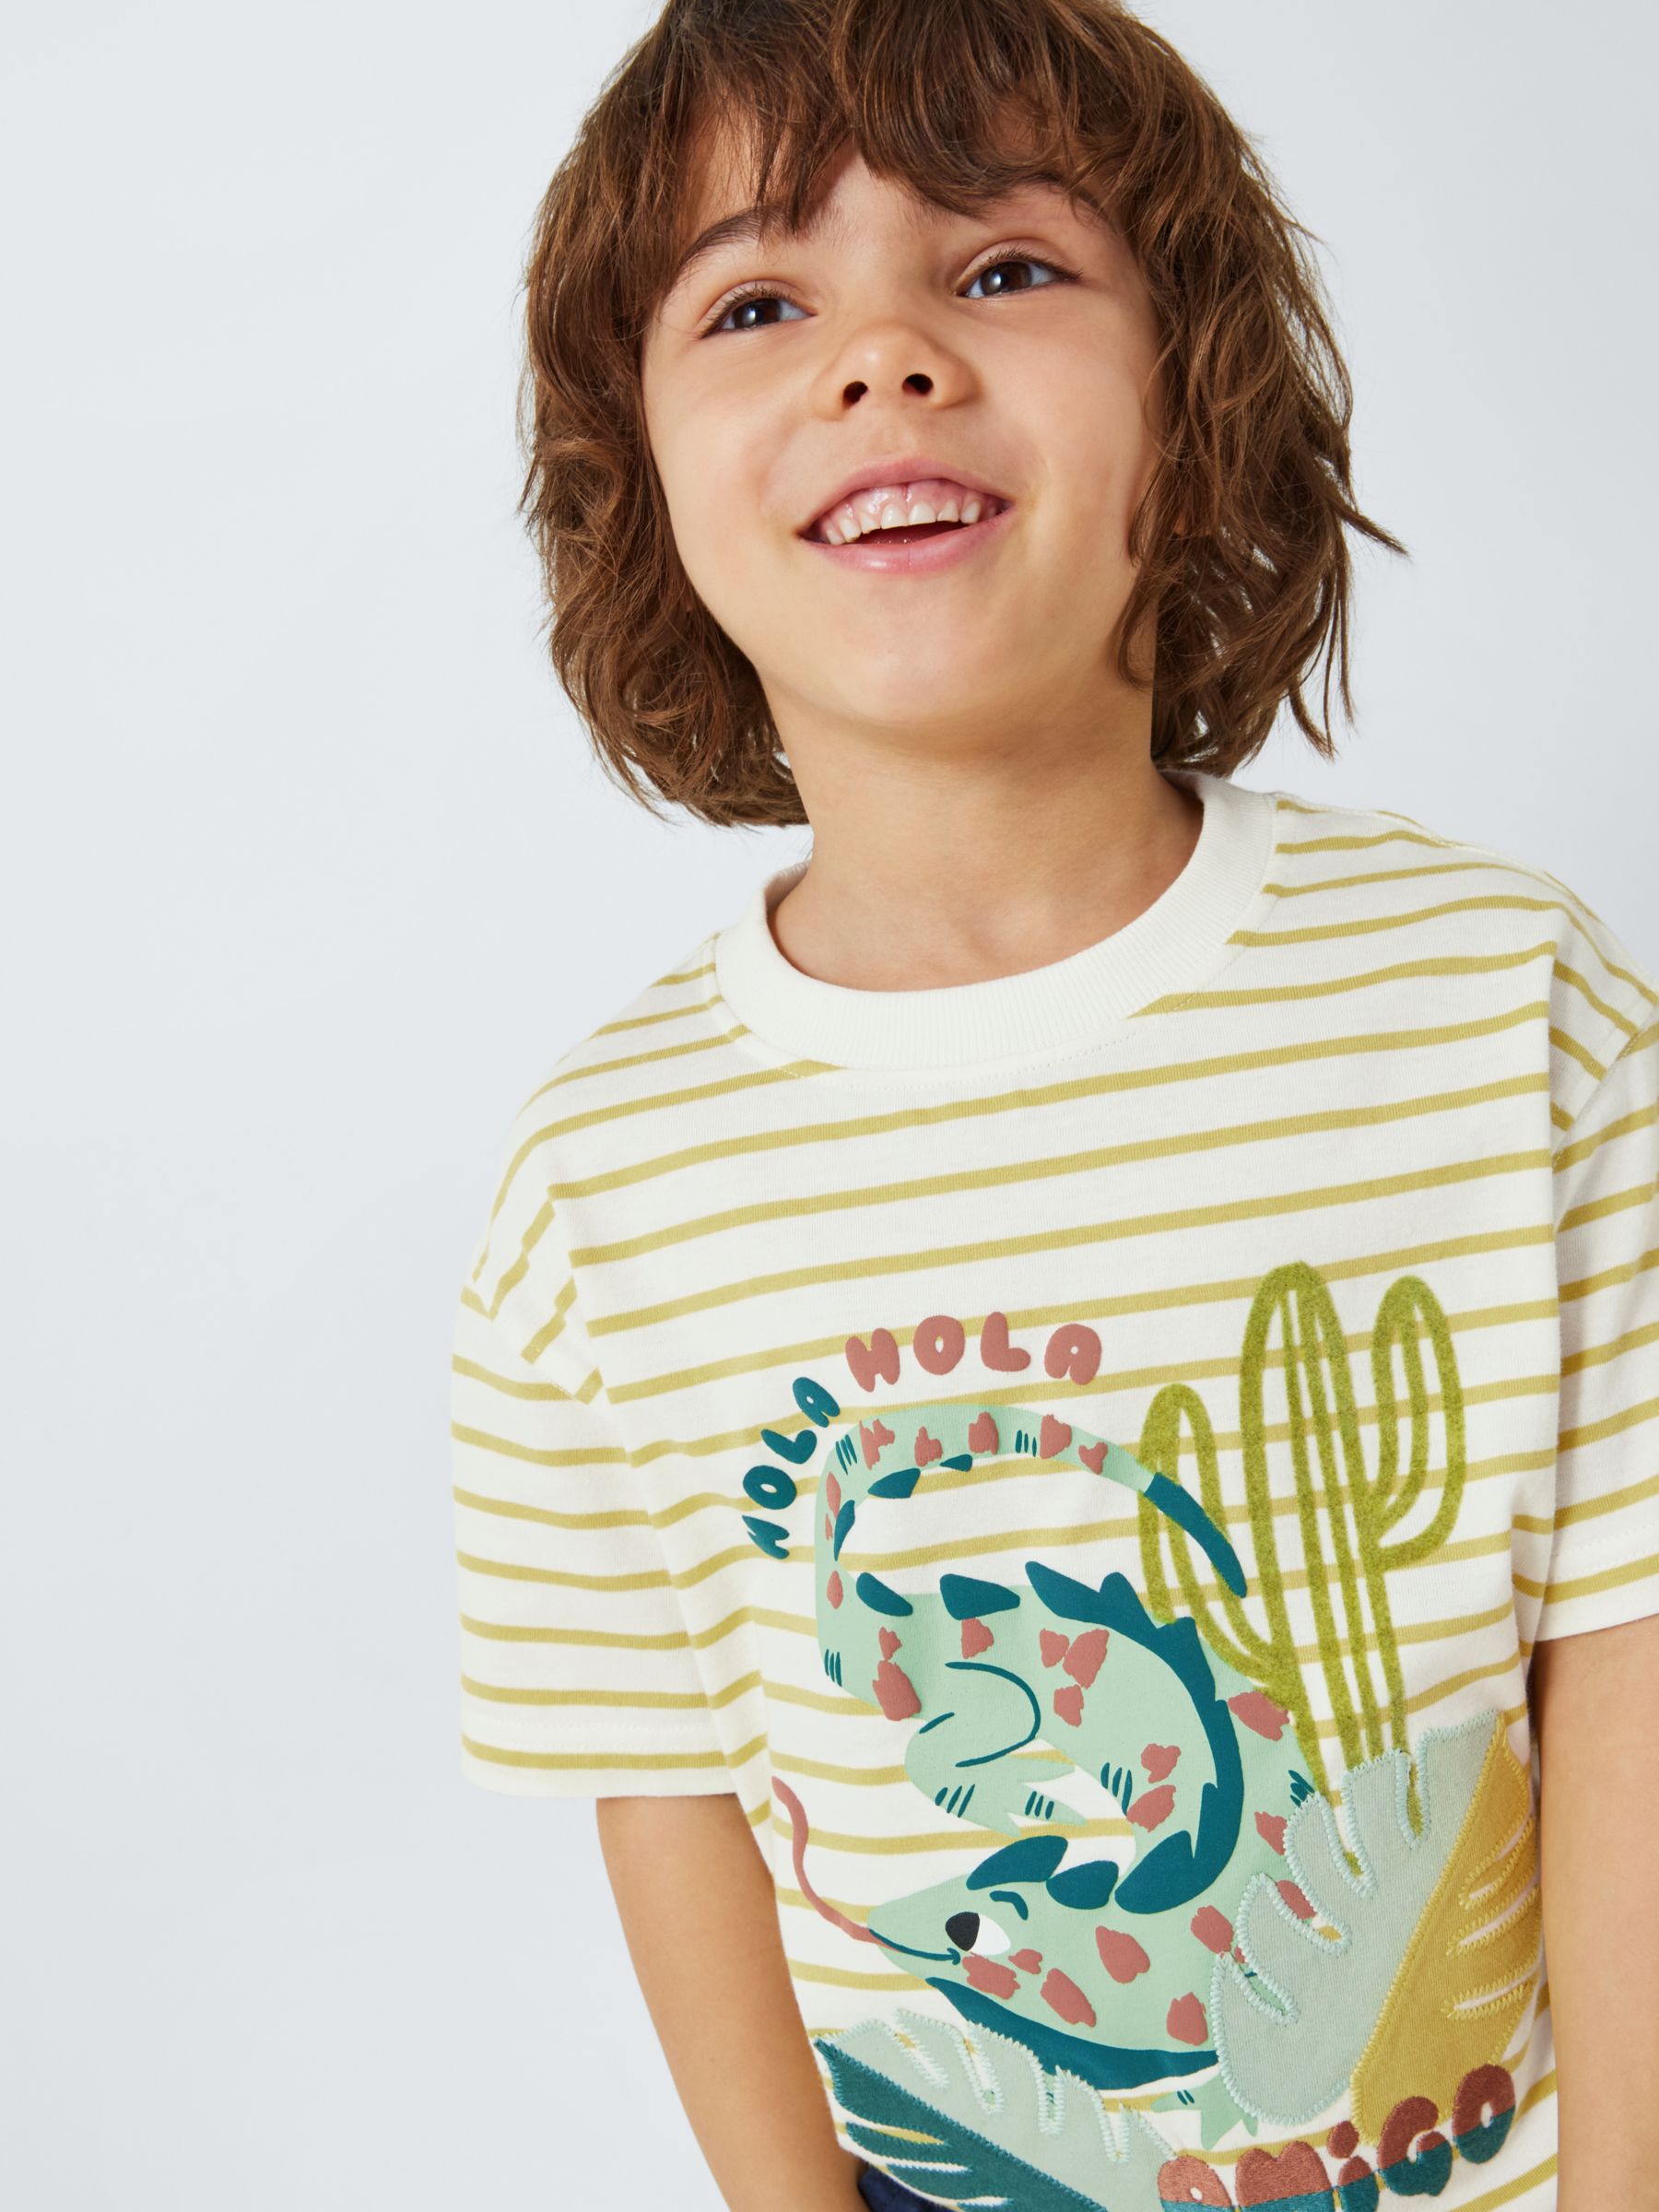 John Lewis Kids' Stripe Iguana Graphic T-Shirt, Yellow, 3 years